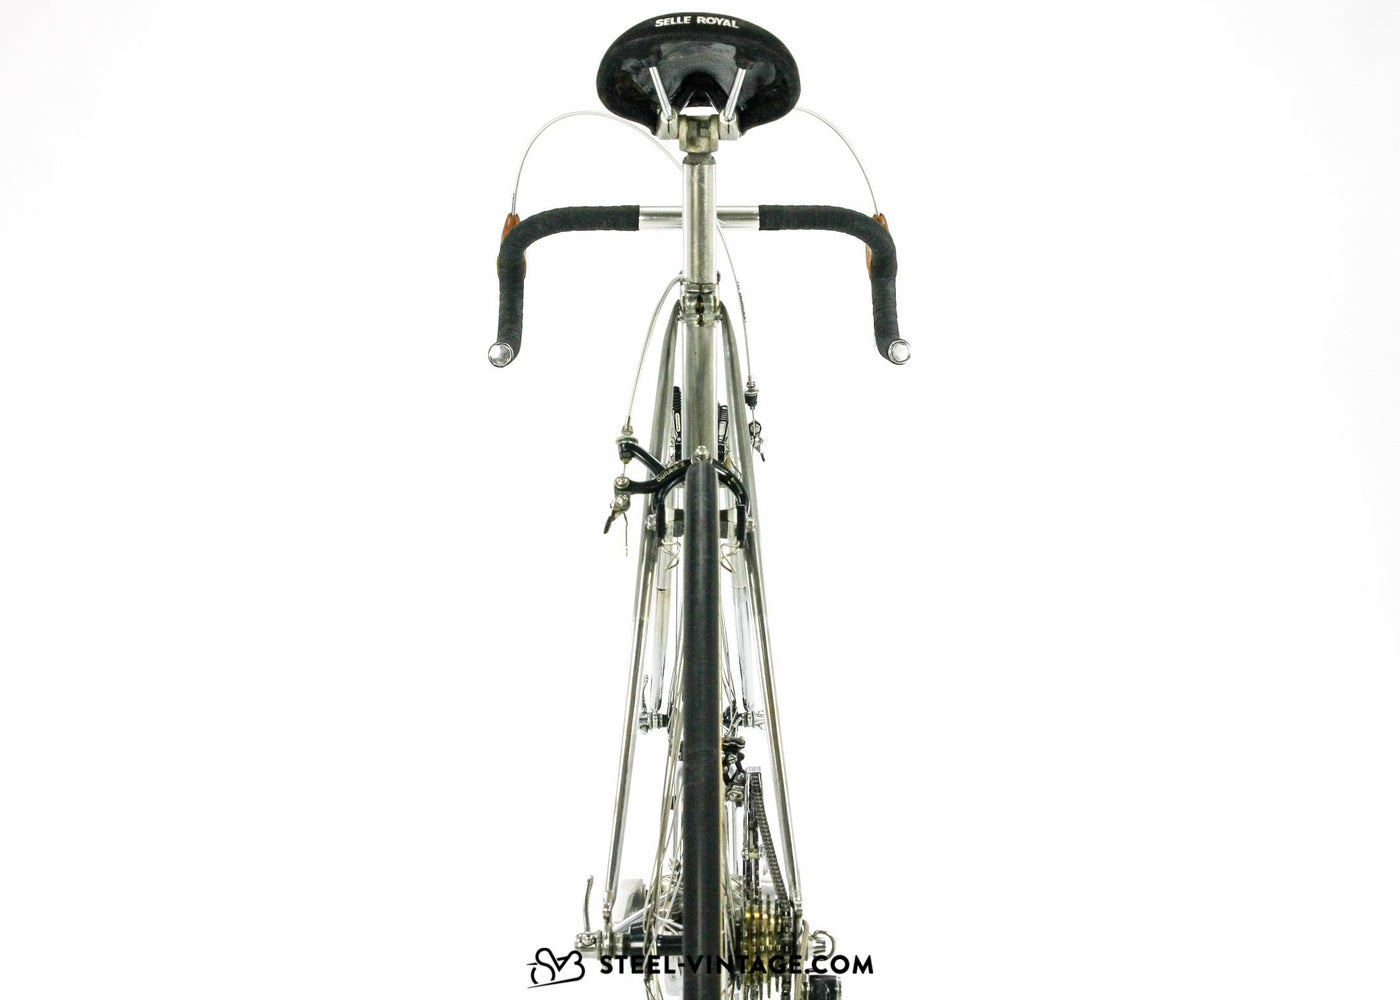 Jan Janssen Champion Du Monde Classic Road Bike 1970s - Steel Vintage Bikes